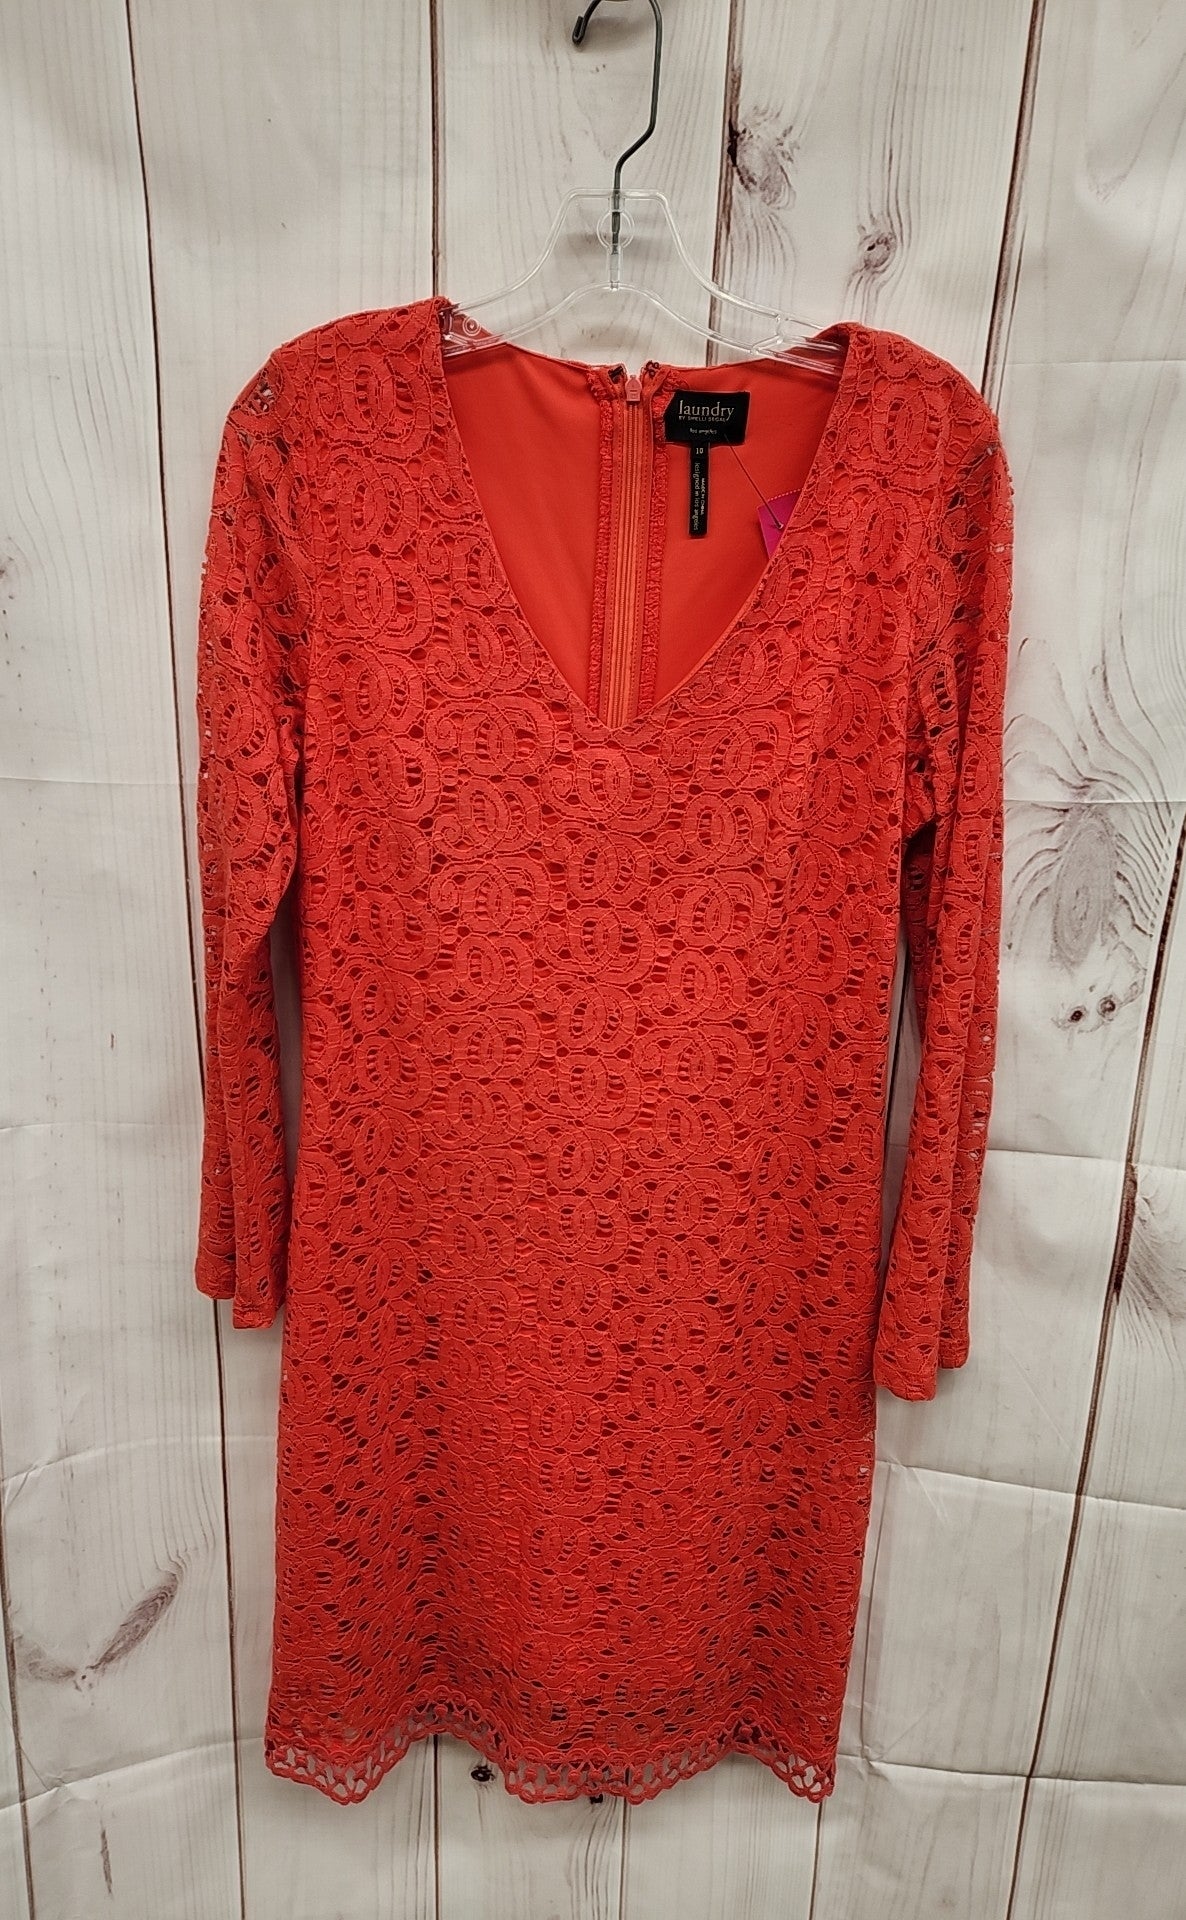 Laundry by Shelli Segal Women's Size 10 Coral Dress